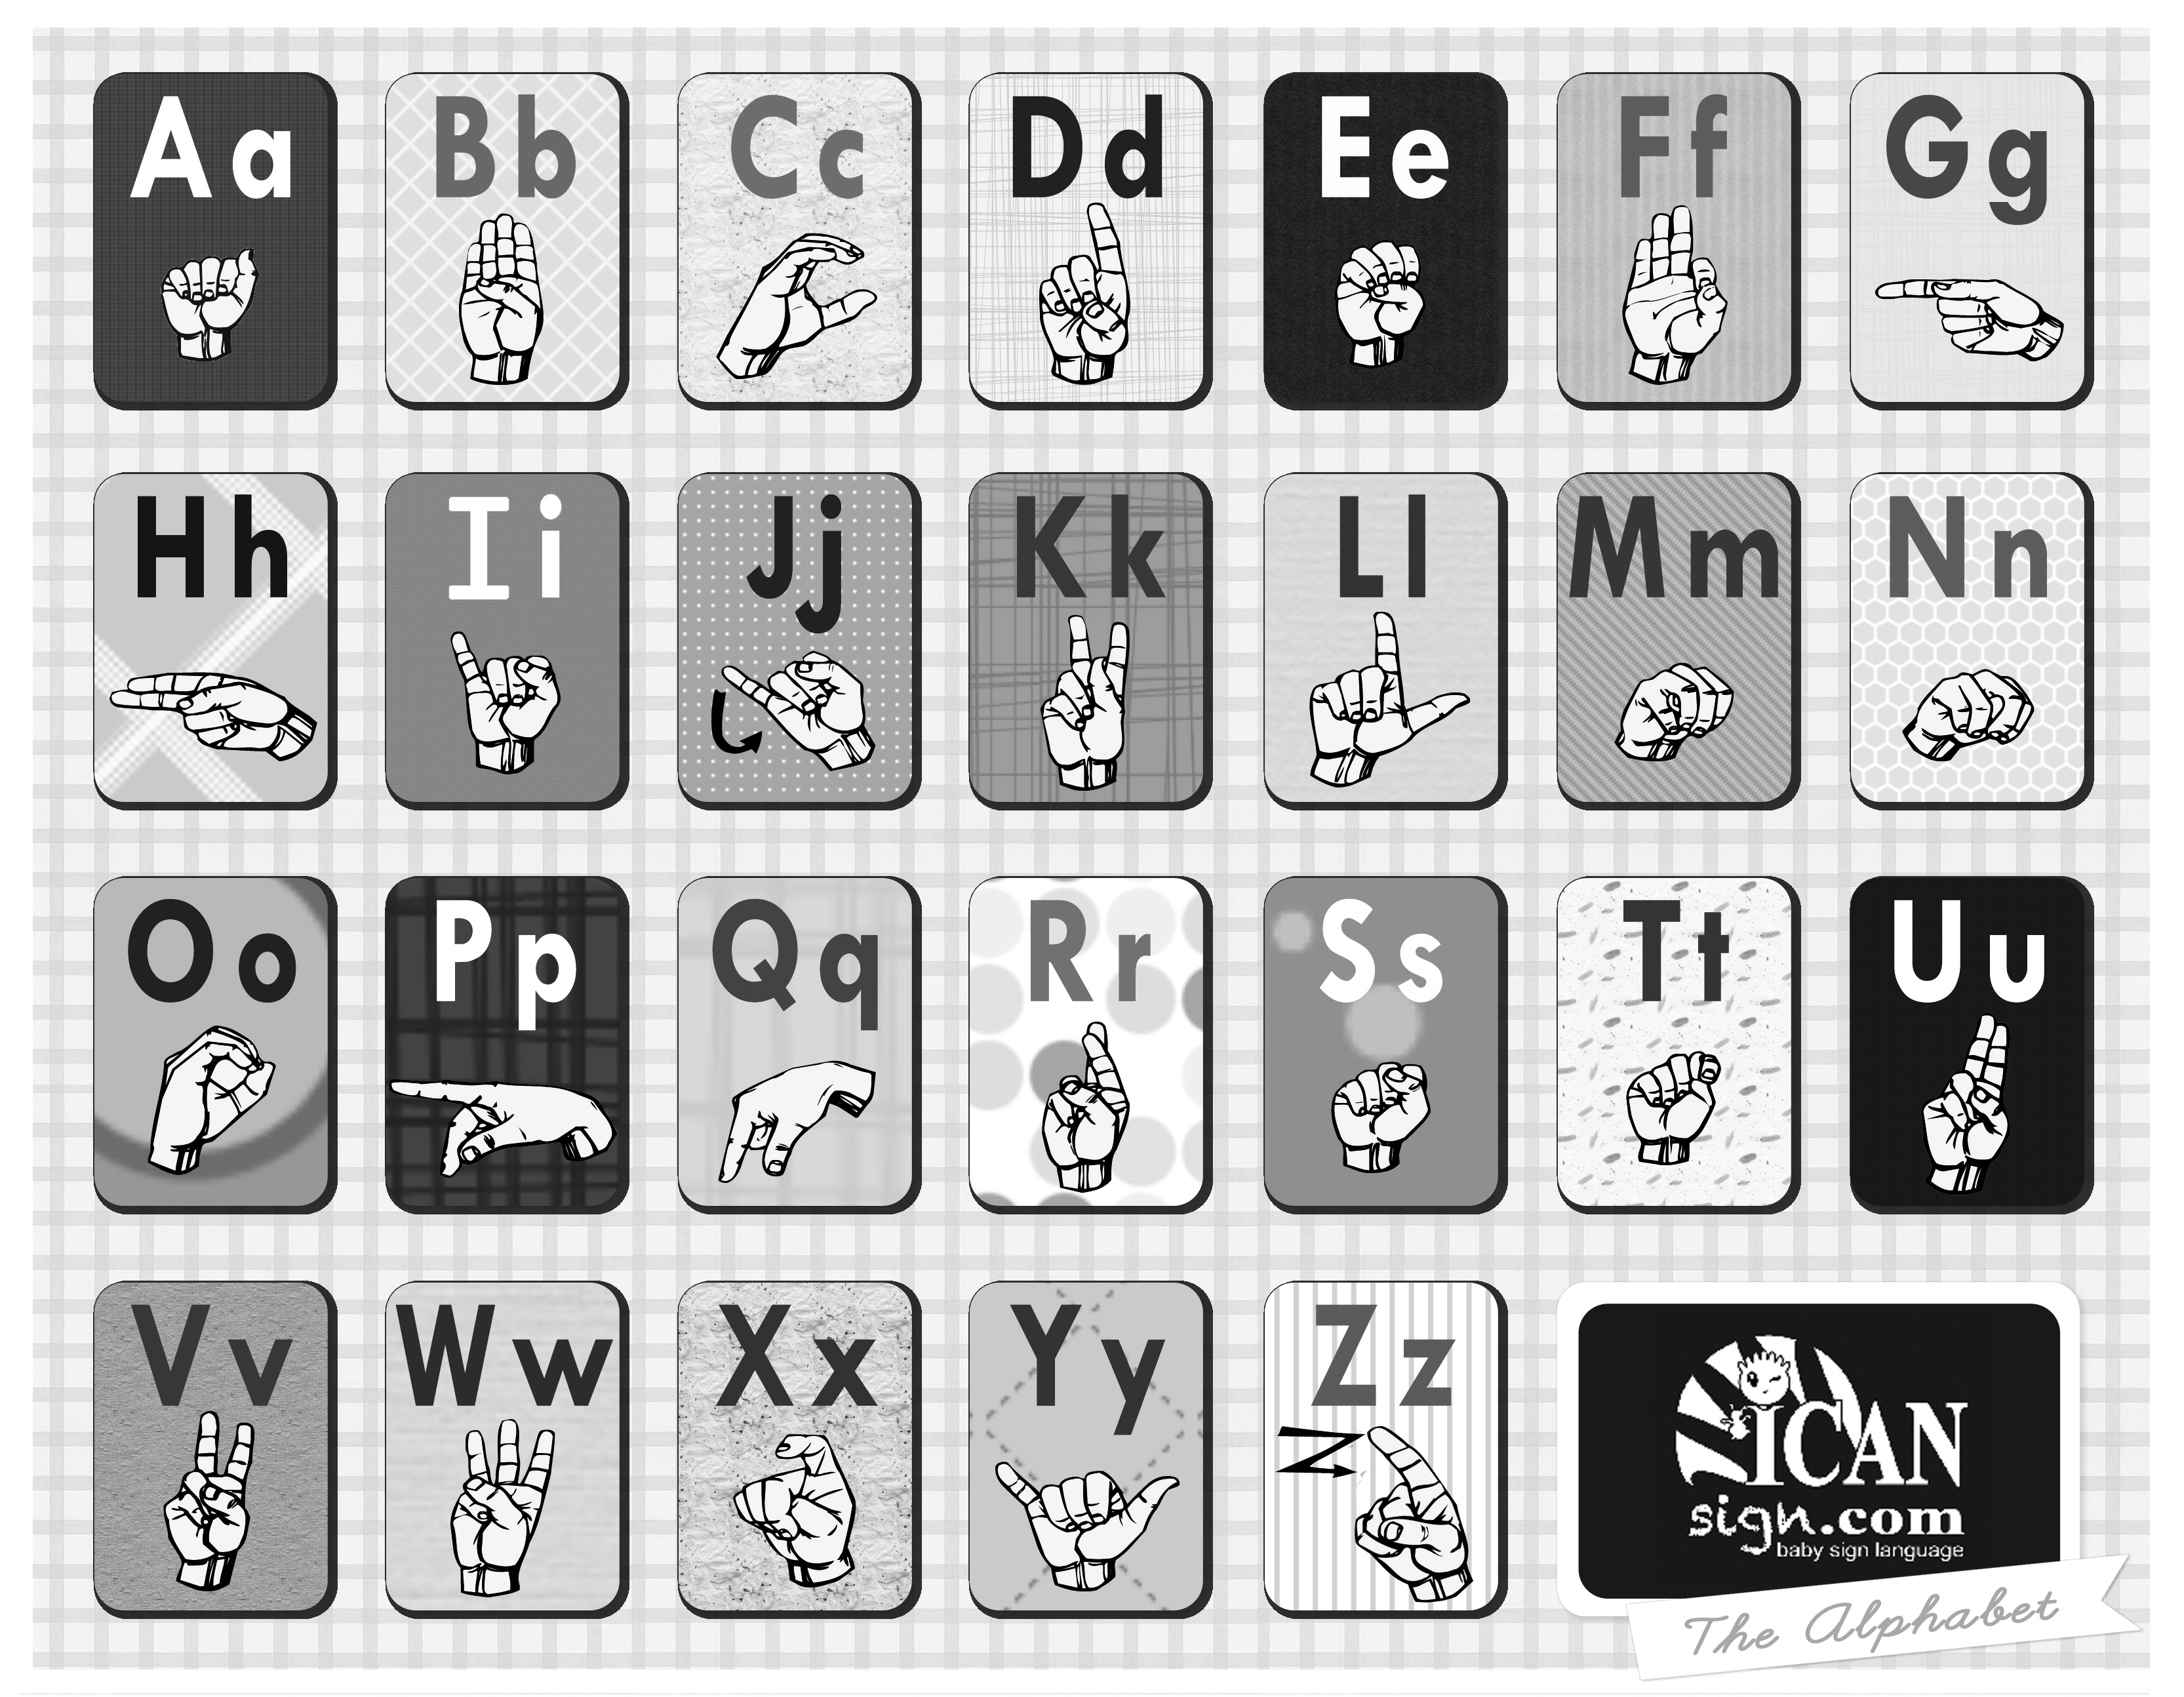 Asl Alphabet Chart And Asl Alphabet Flashcards | Baby Sign Language - Sign Language Flash Cards Free Printable